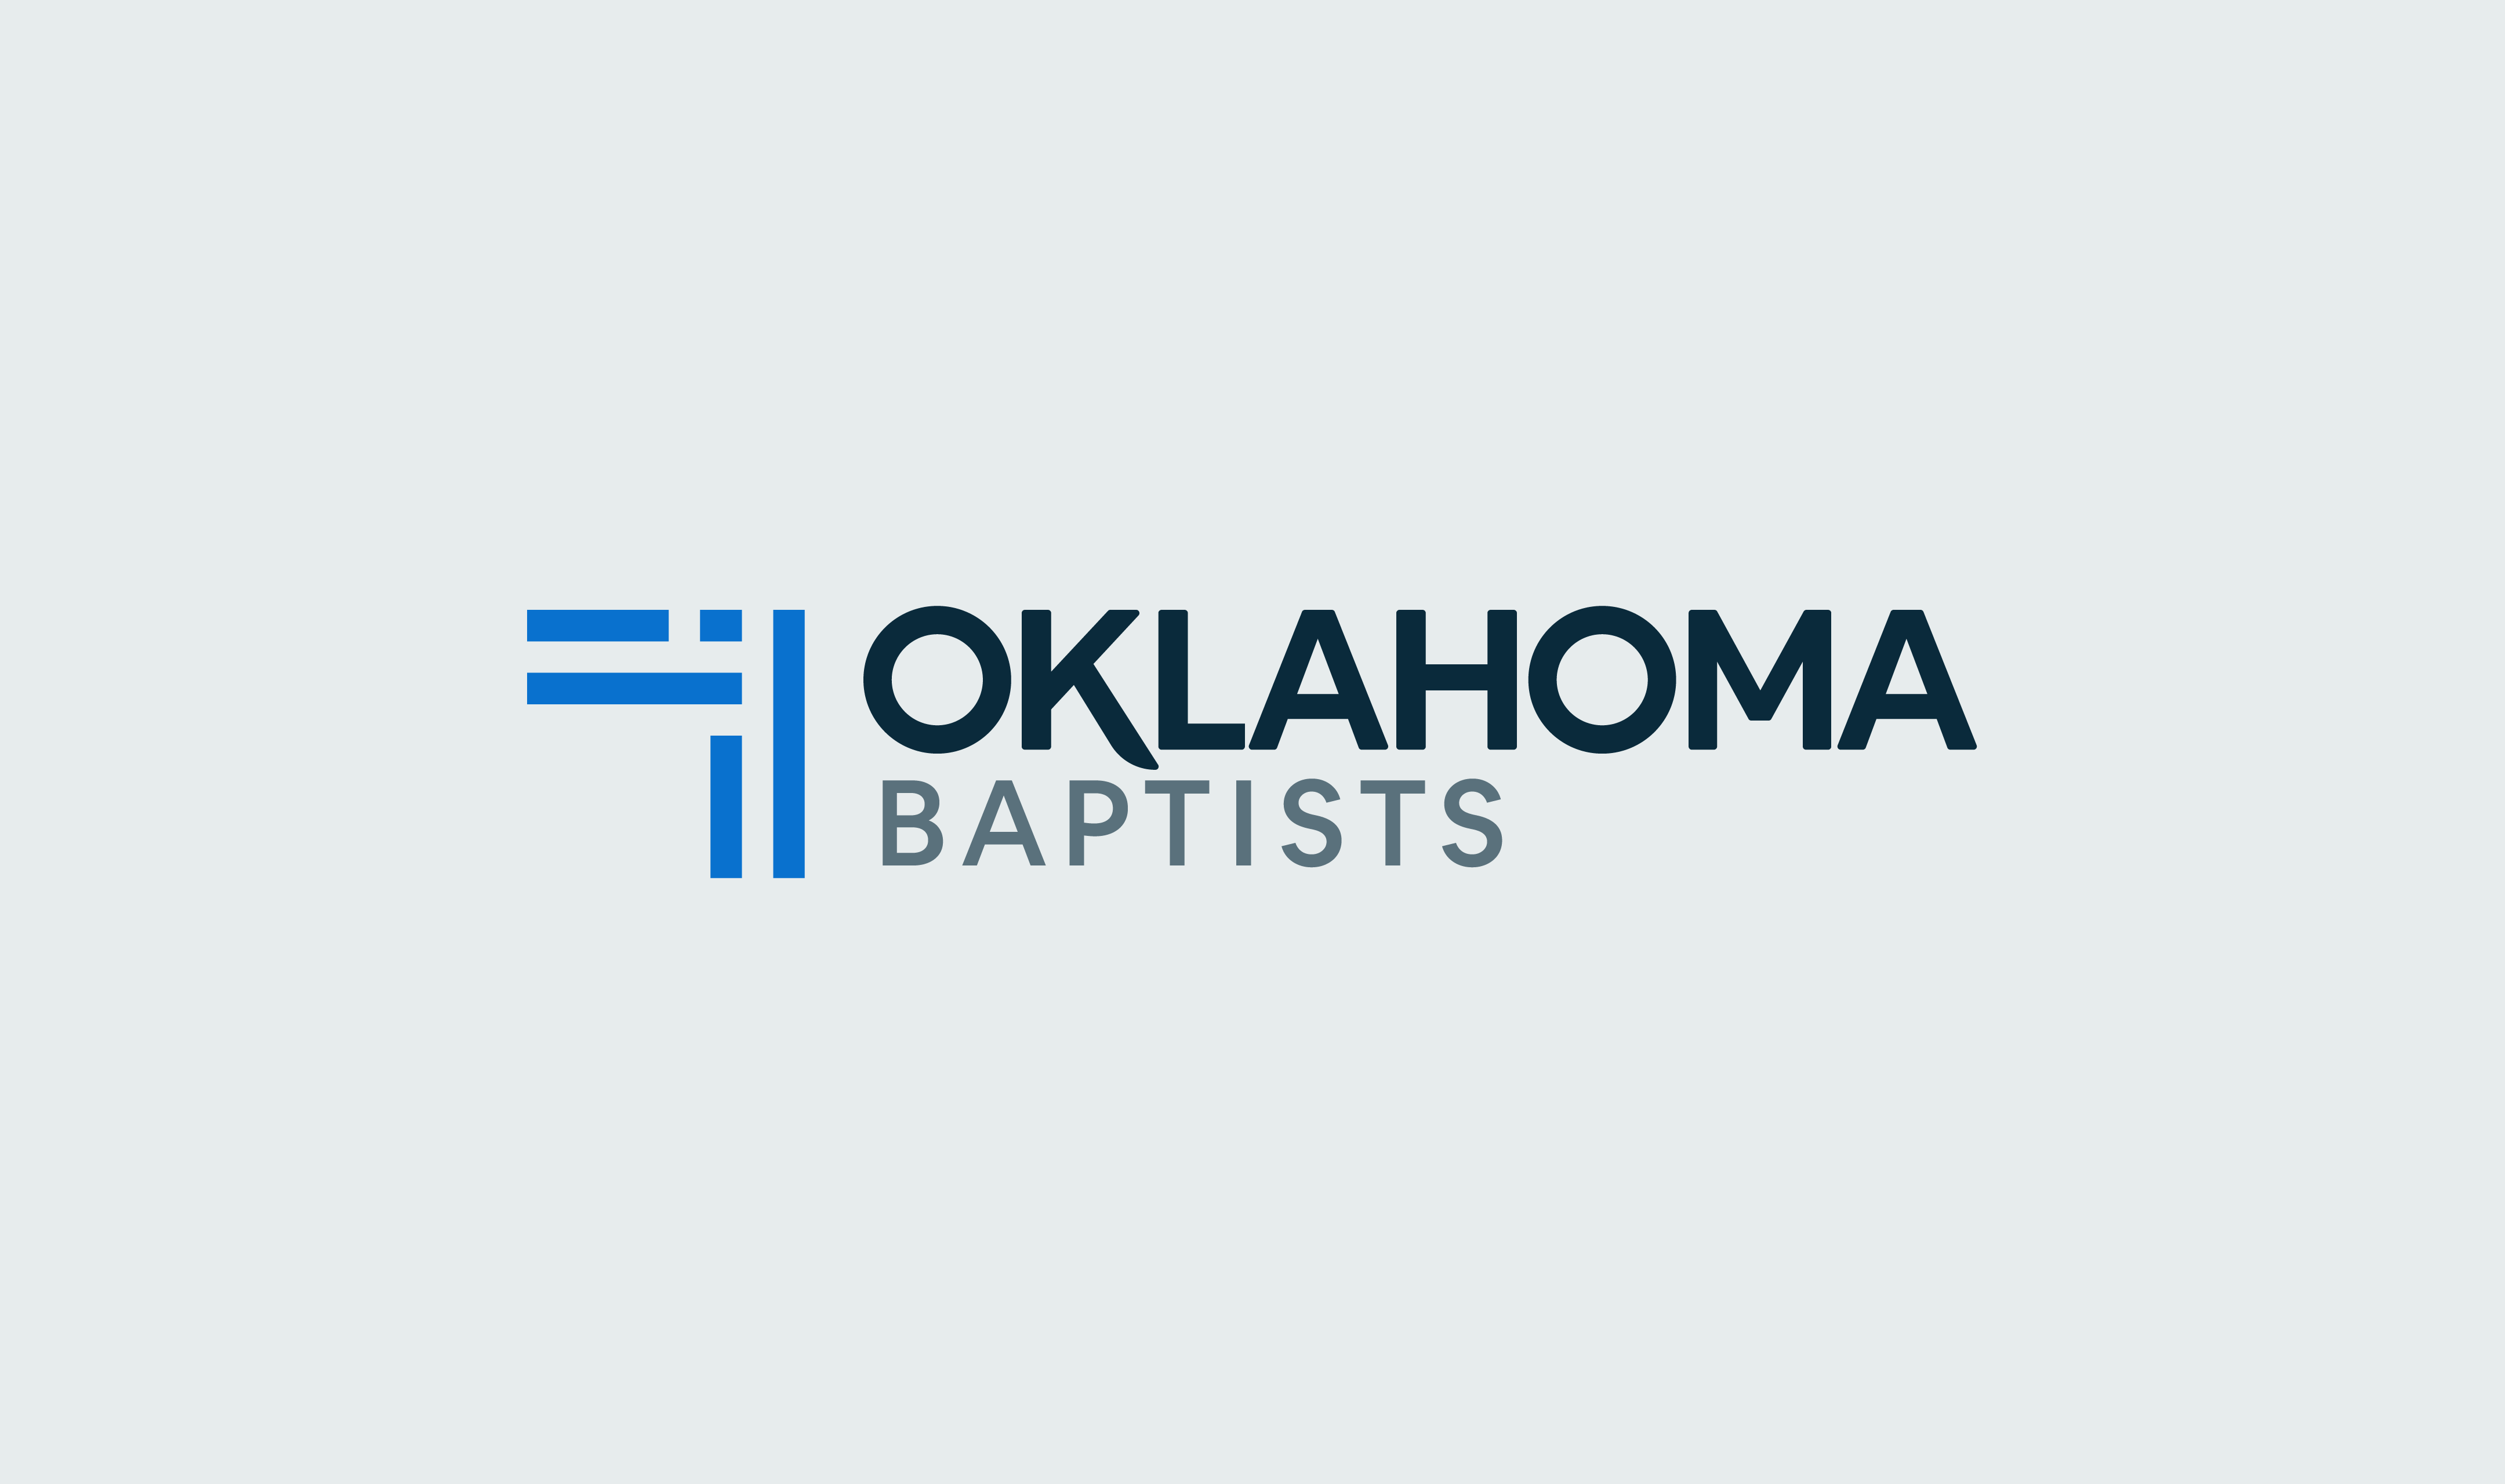 The new identity mark of the Oklahoma Baptist Convention